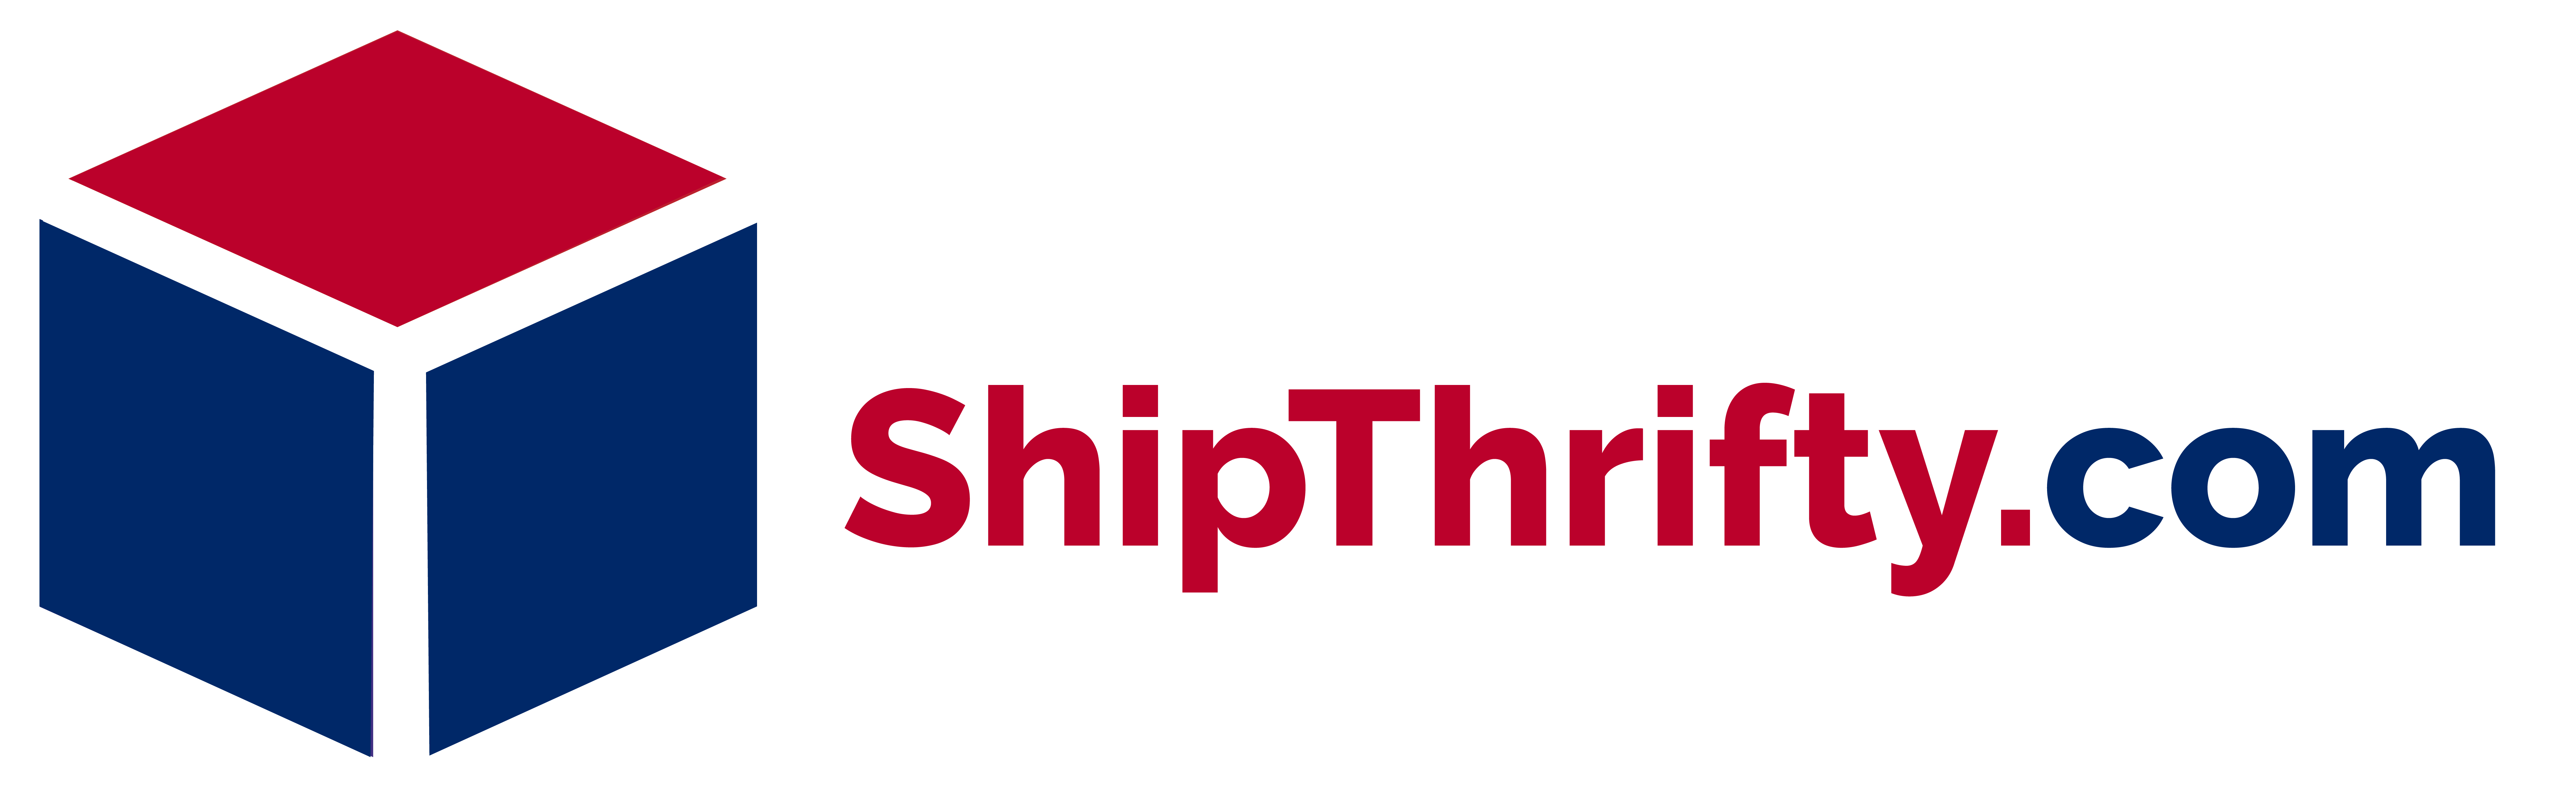 Shipthrifty